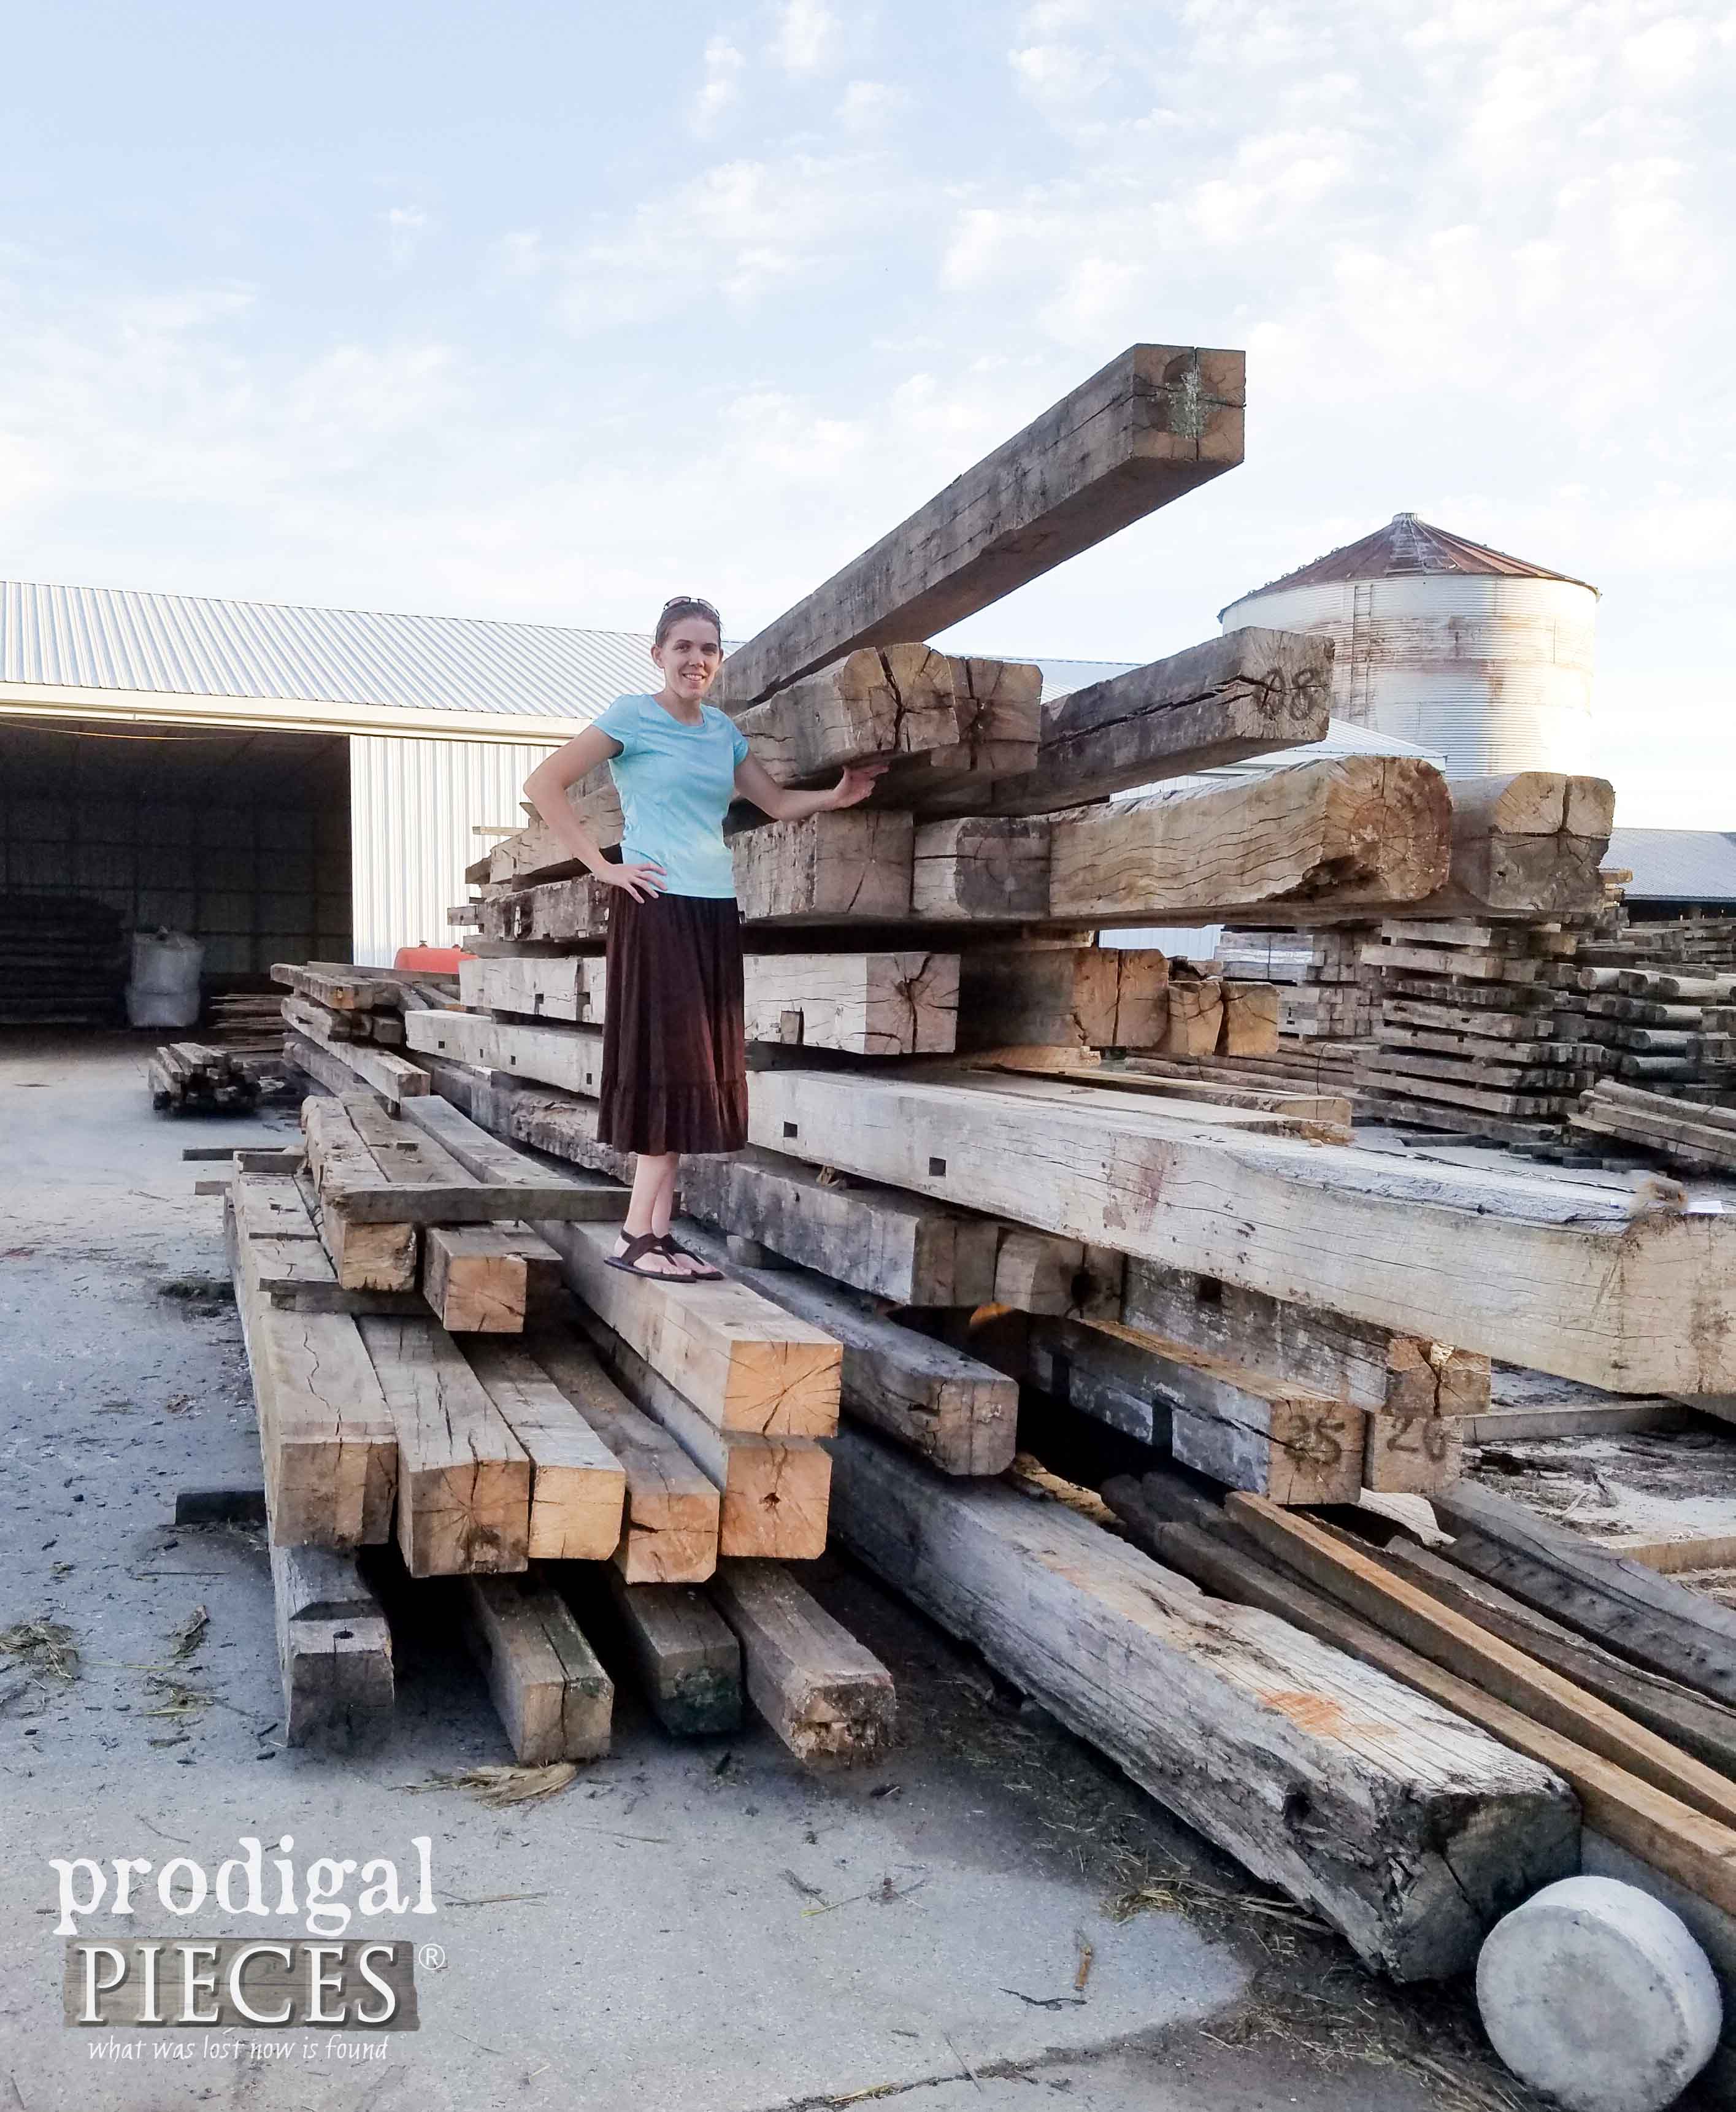 Larissa of Prodigal Pieces on Reclaimed Wood Pile | prodigalpieces.com